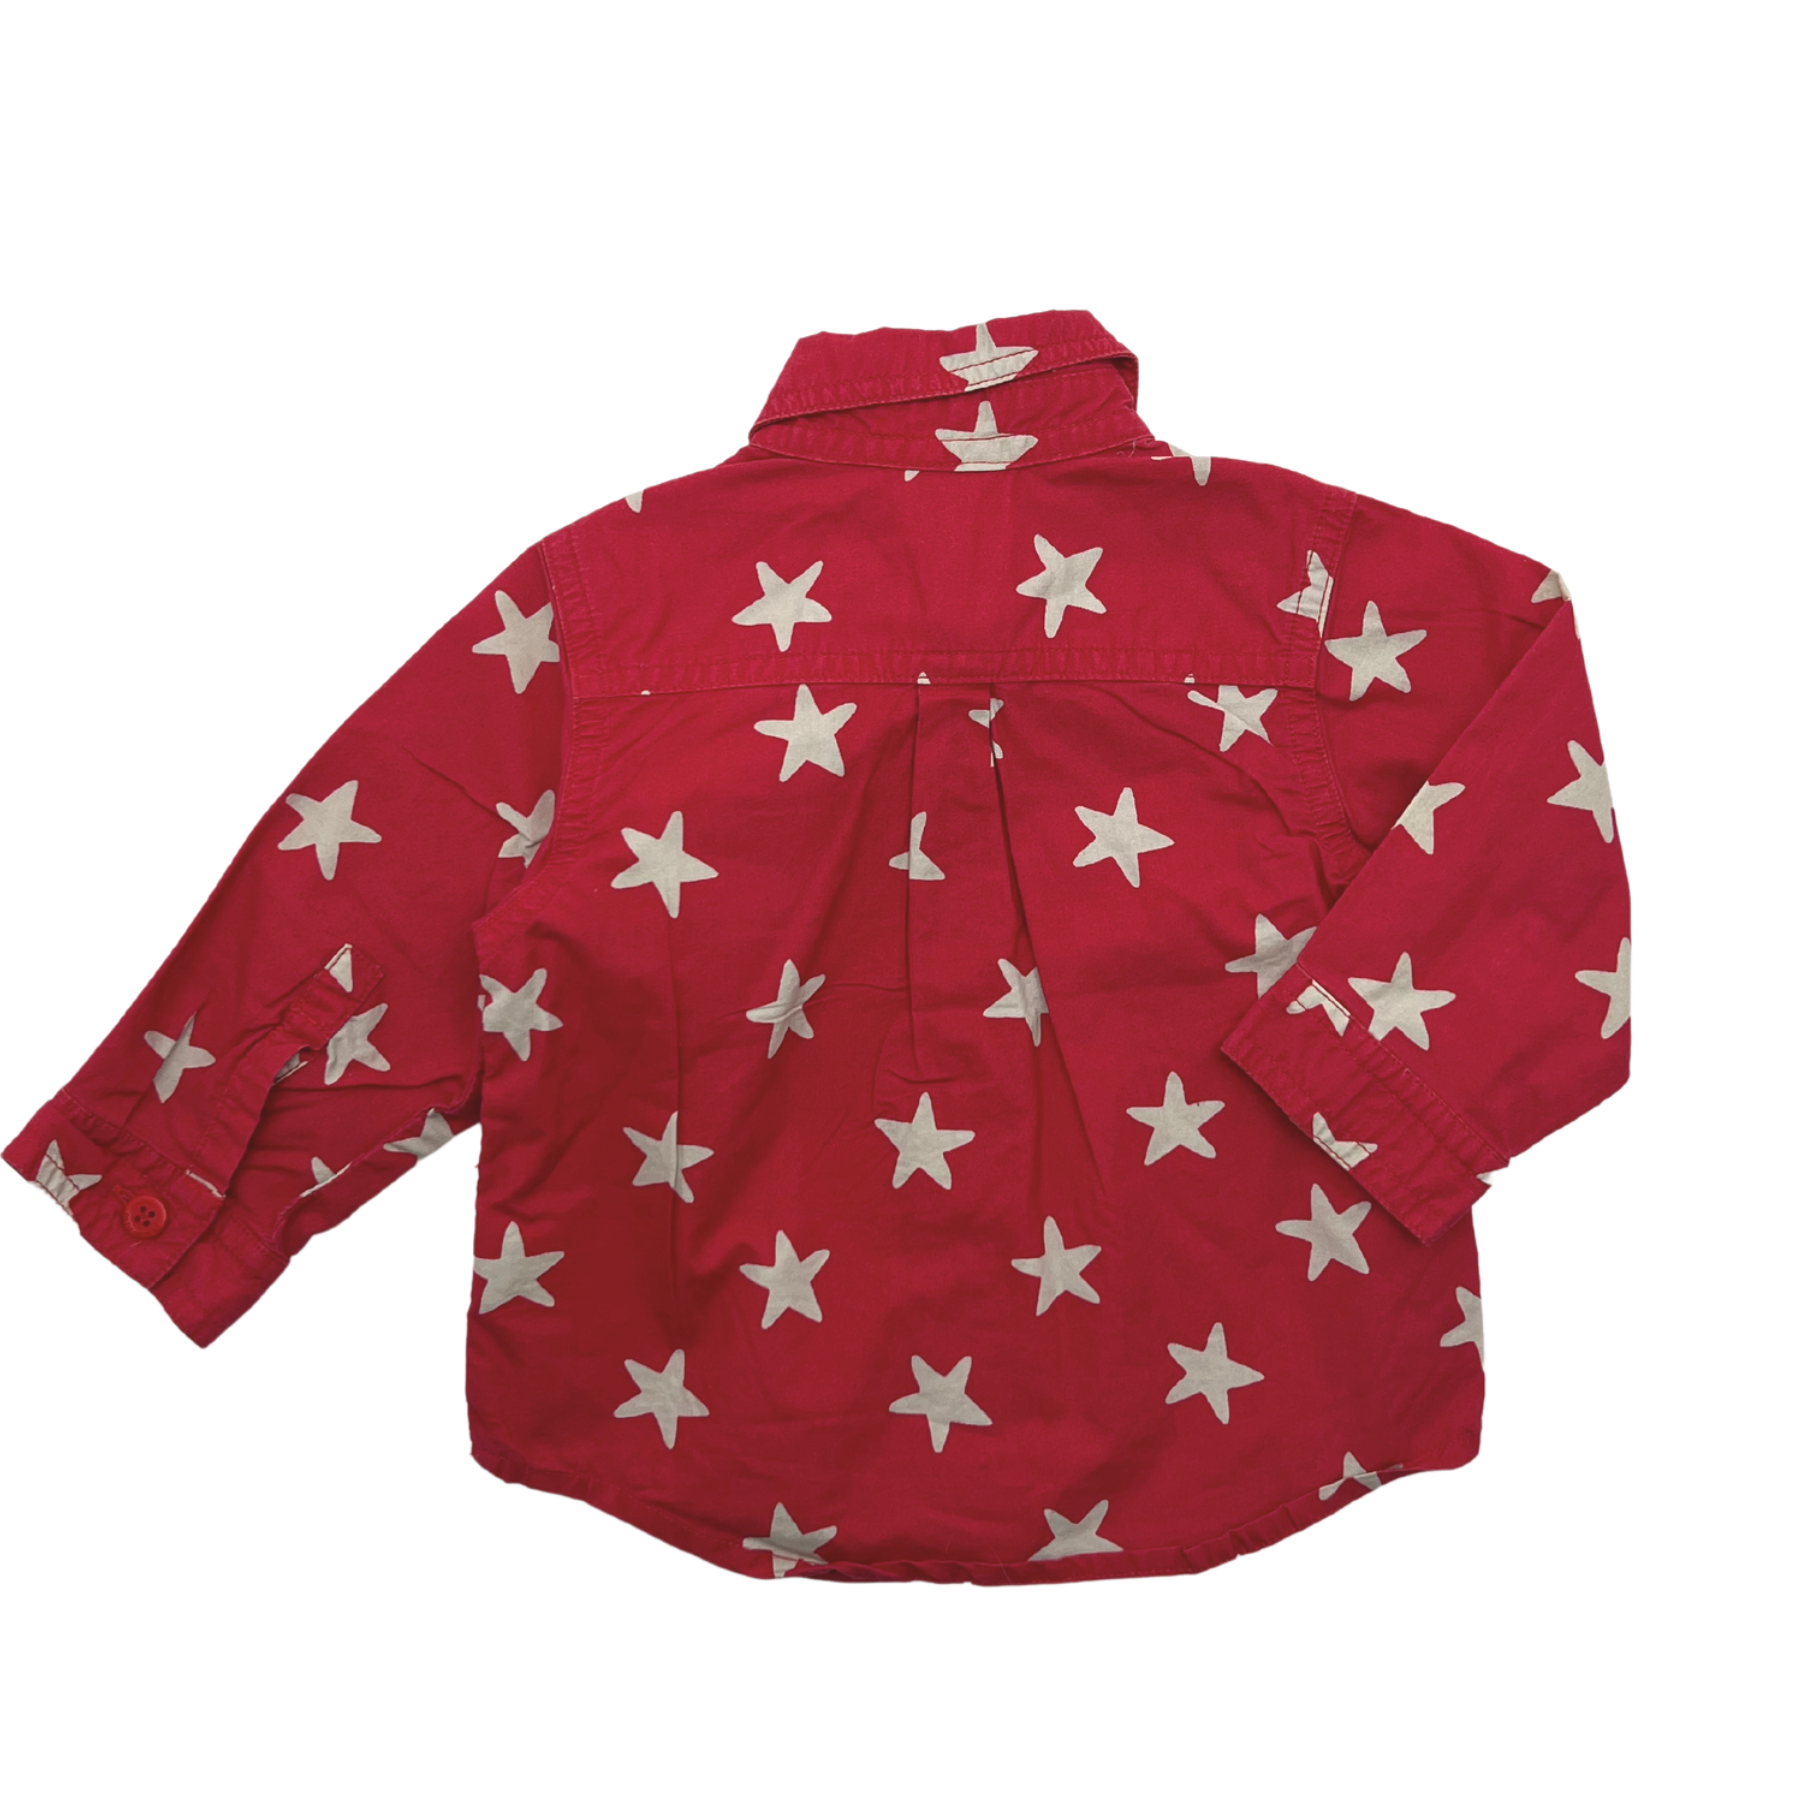 PETIT BATEAU - Shirt with stars - 6 months